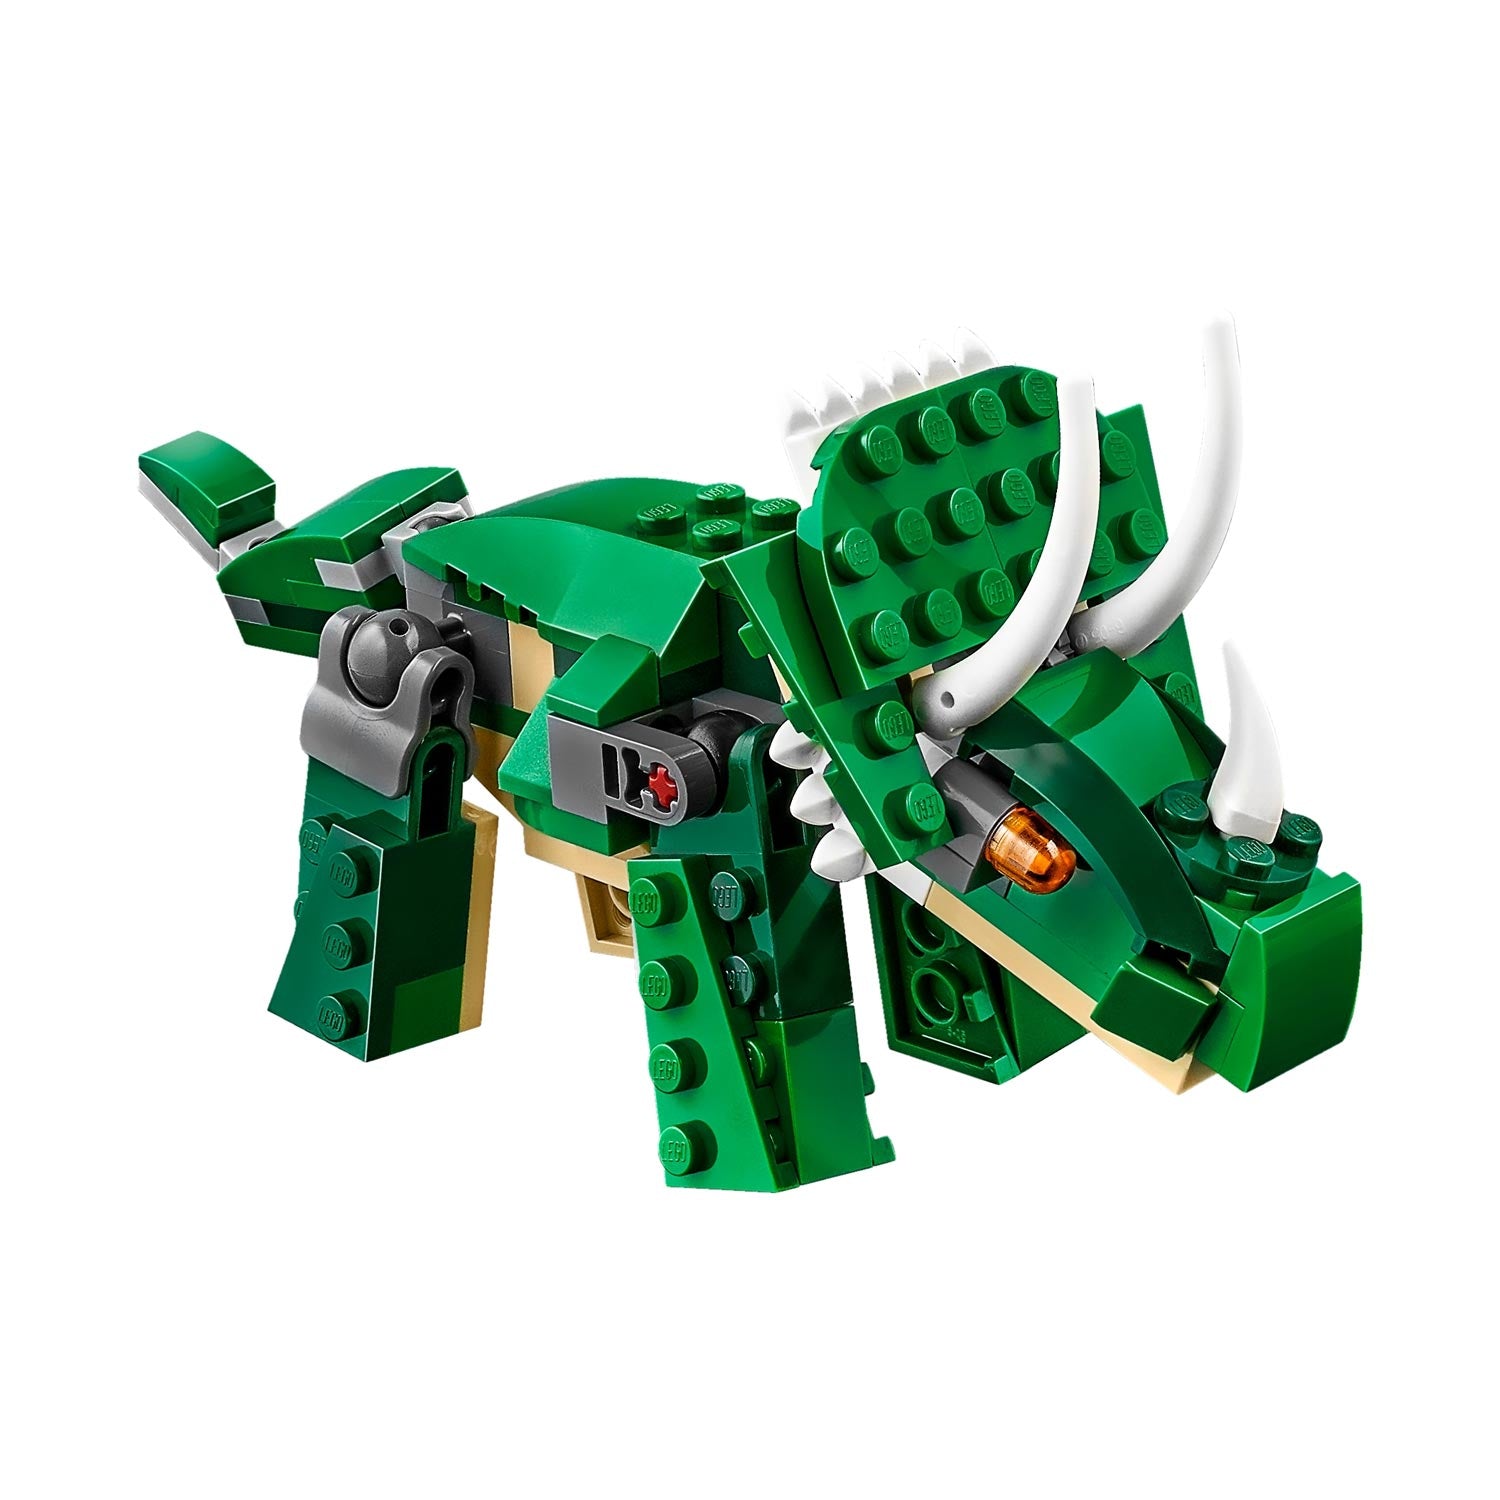 LEGO Mighty Dinosaur Playset, 3 in 1 2